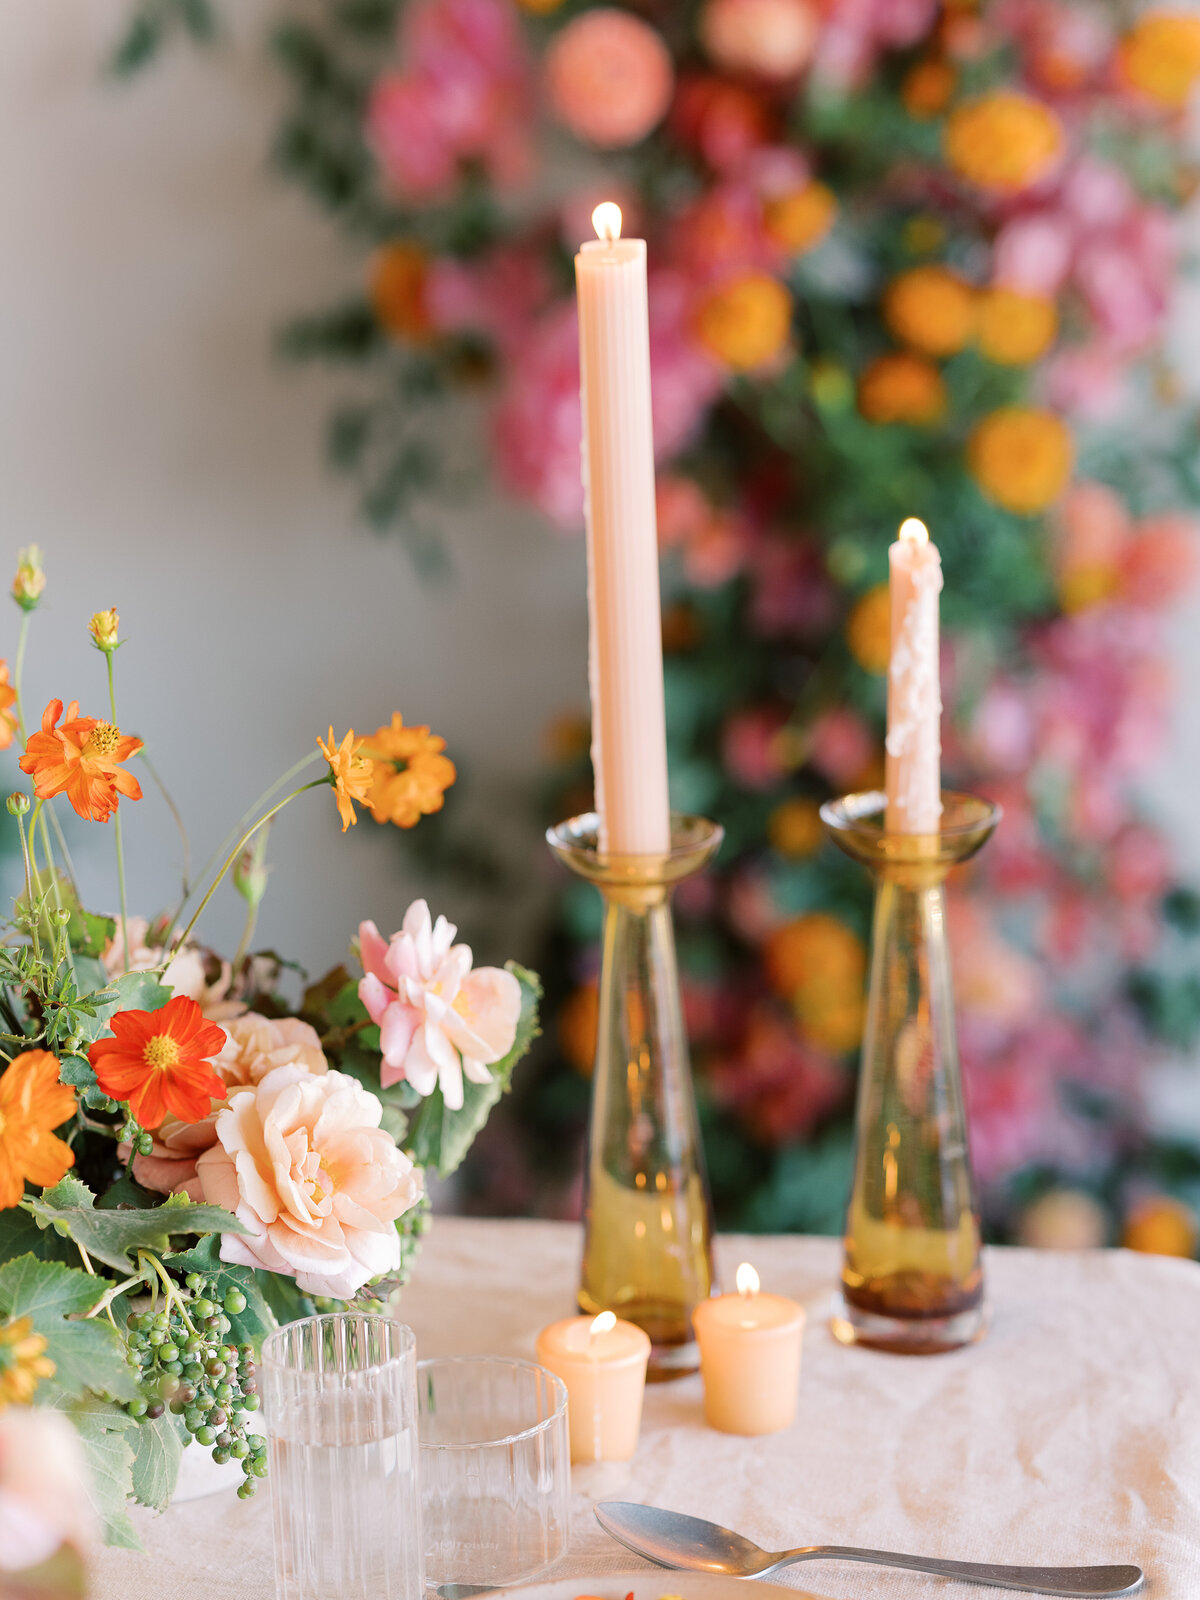 Sarah Rae Floral Designs Wedding Event Florist Flowers Kentucky Chic Whimsical Romantic Weddings2